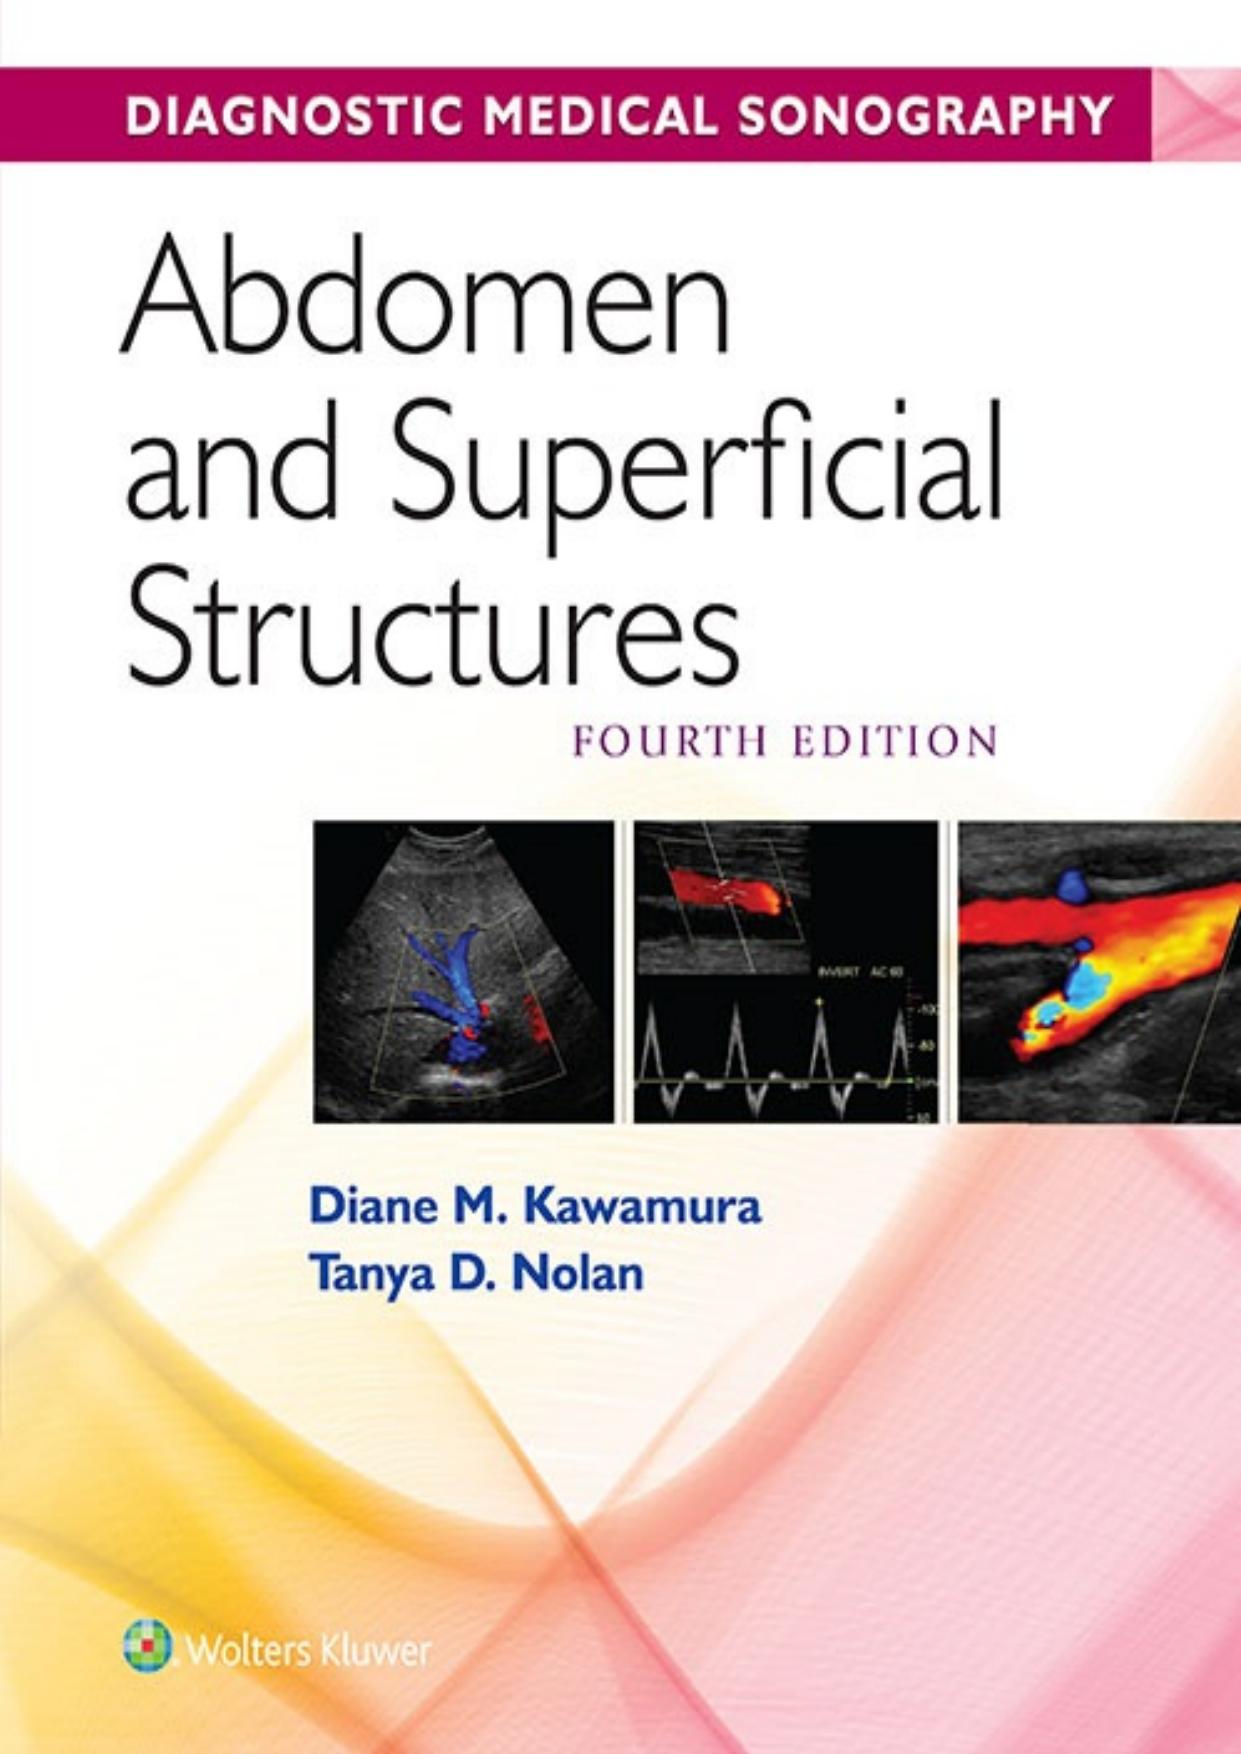 Abdomen and Superficial Structures (Diagnostic Medical Sonography Series) 4th - Diane Kawamura & Tanya Nolan.jpg